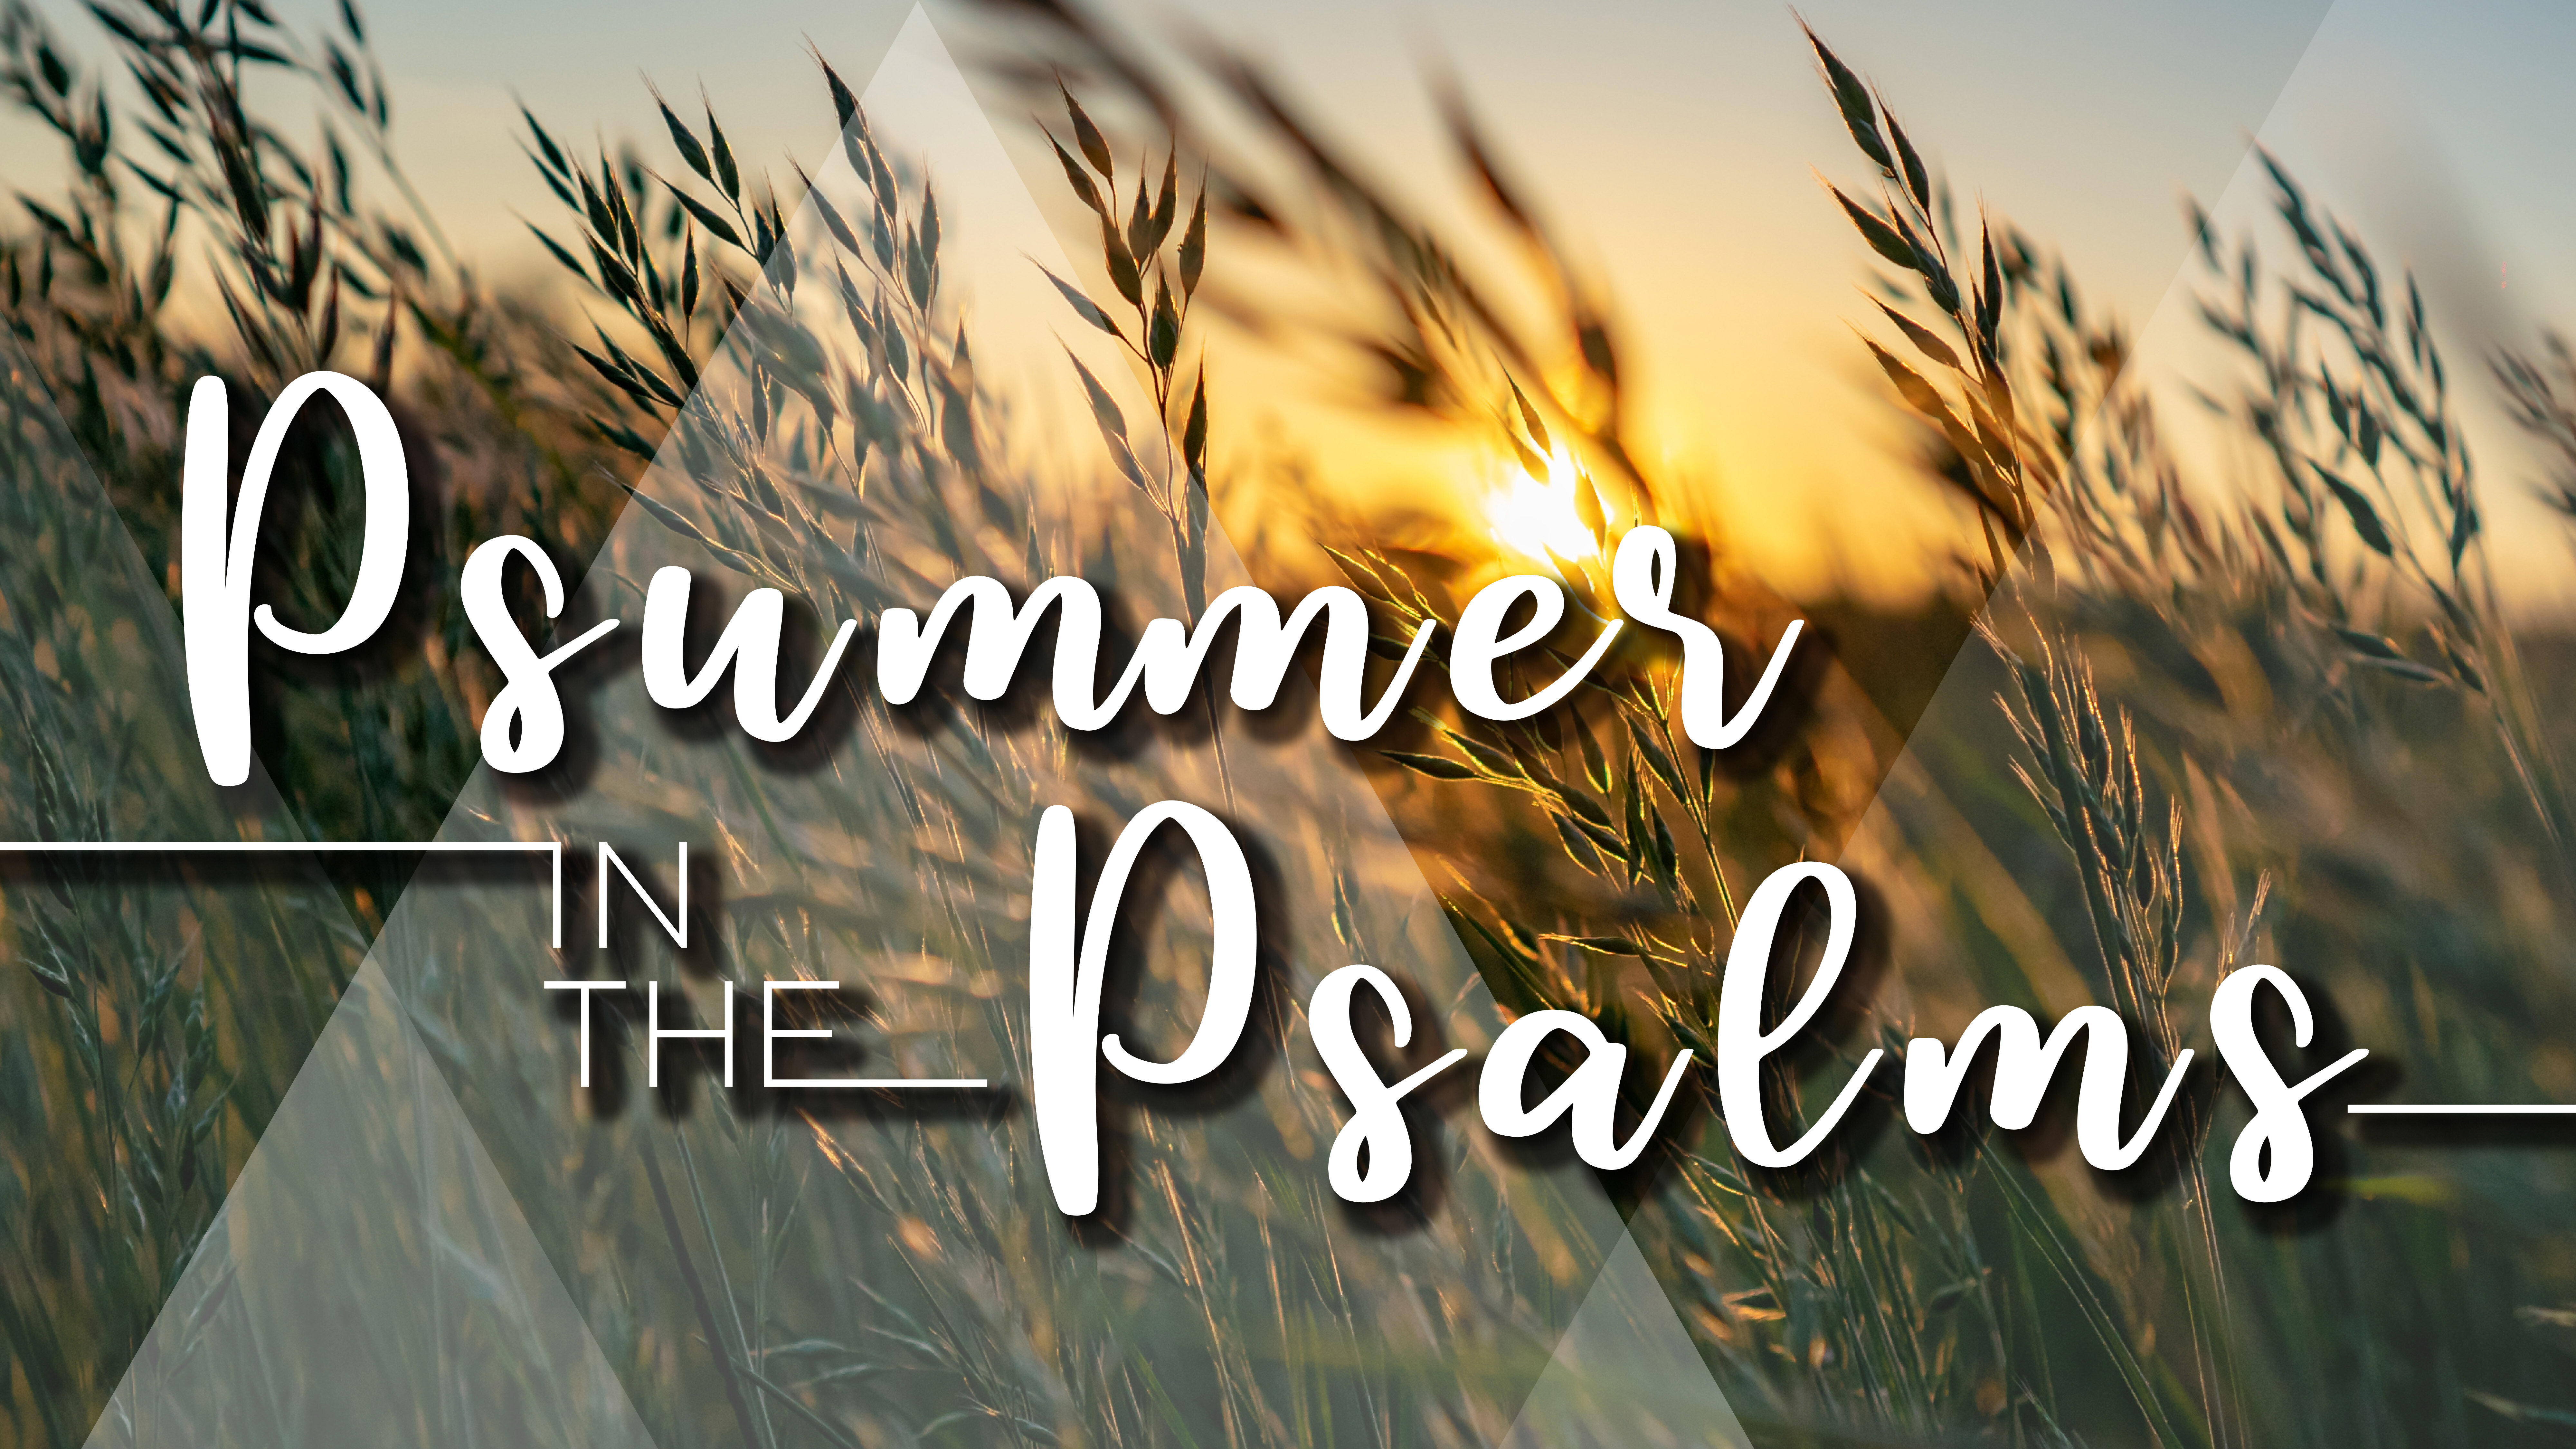 Psummer in the Psalms